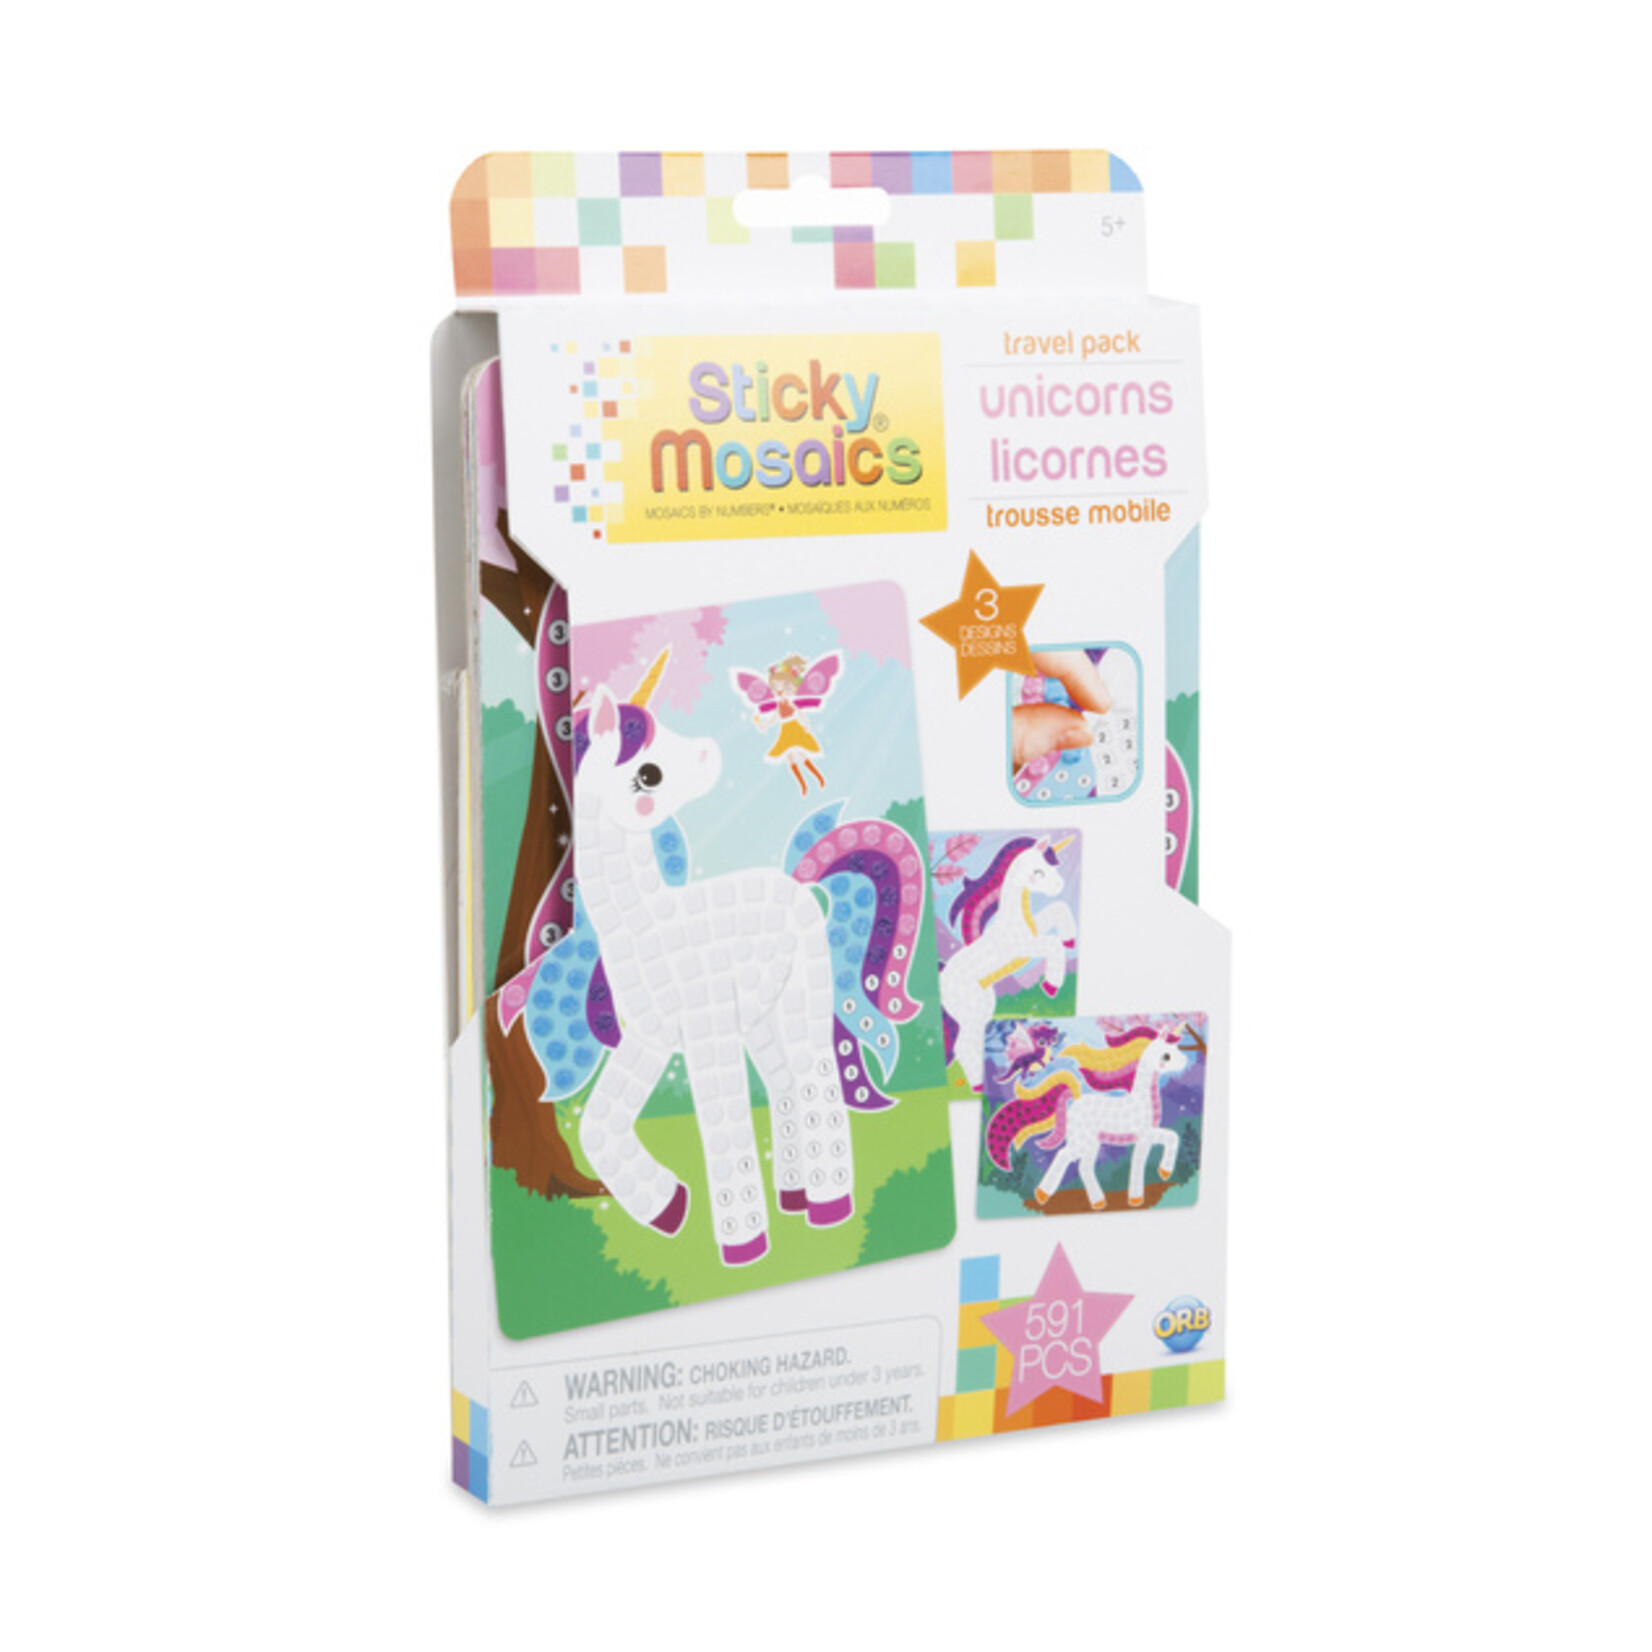 orbtoys Sticky Mosaics Travel Pack, unicorn